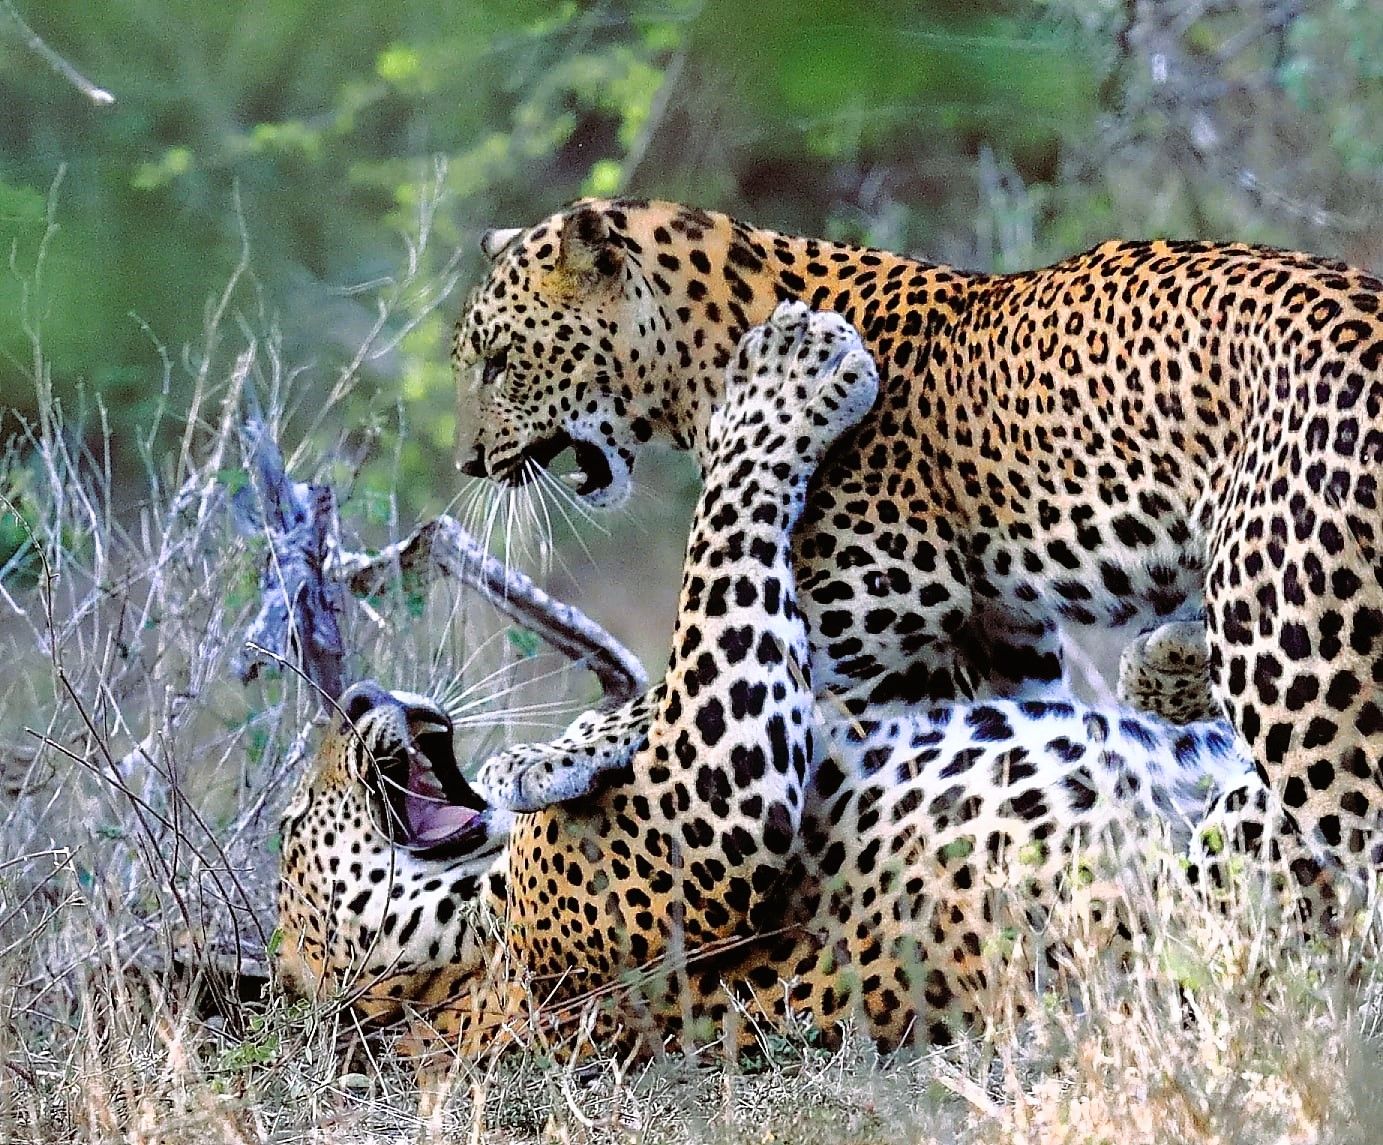 Two Sri Lankan Leopard cubs play fighting at Yala National Park, Sri Lanka